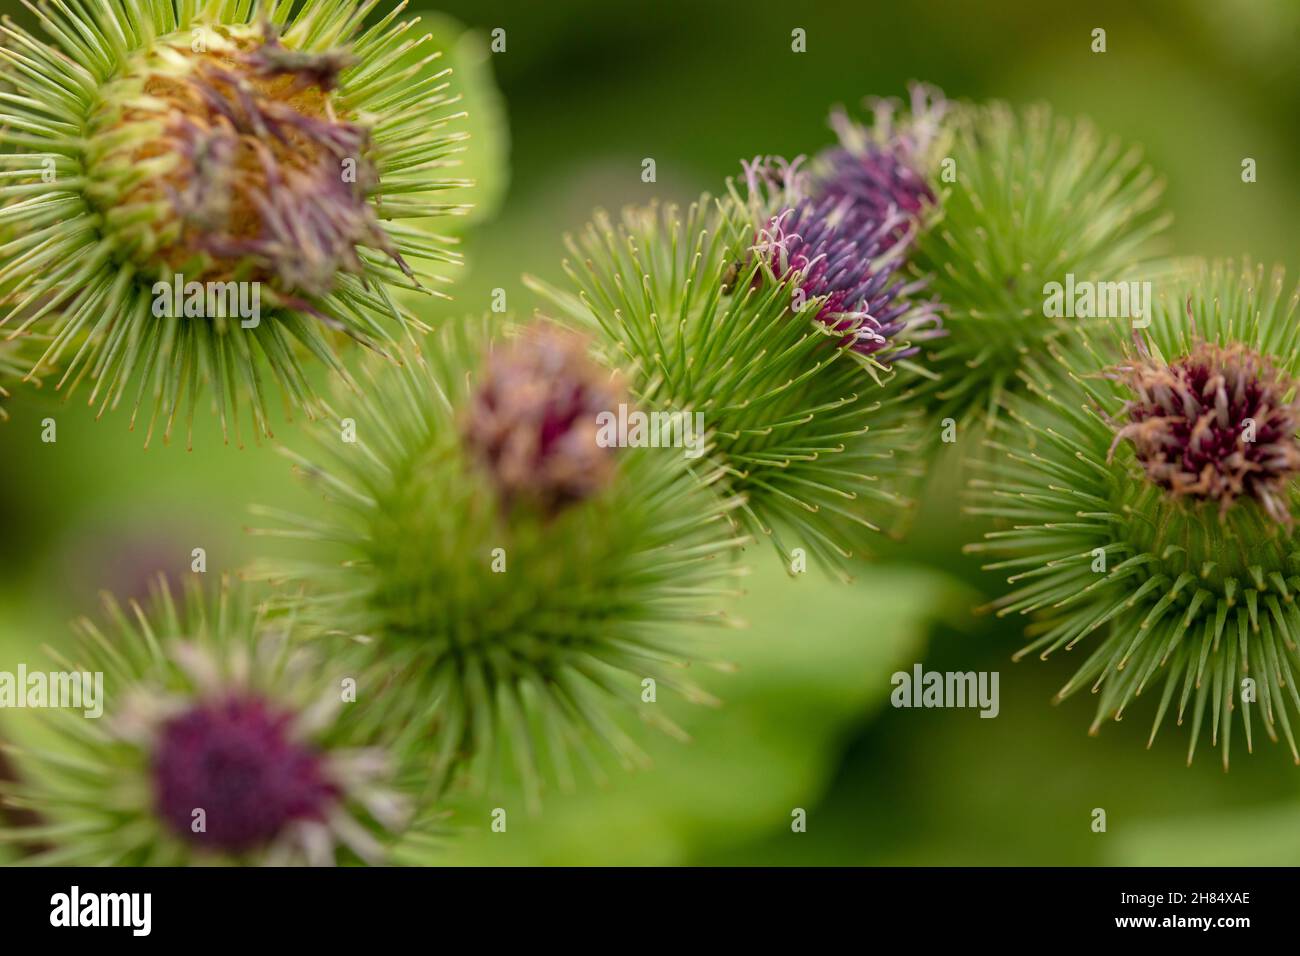 Burdock just flowering, natural close-up plant portrait Stock Photo